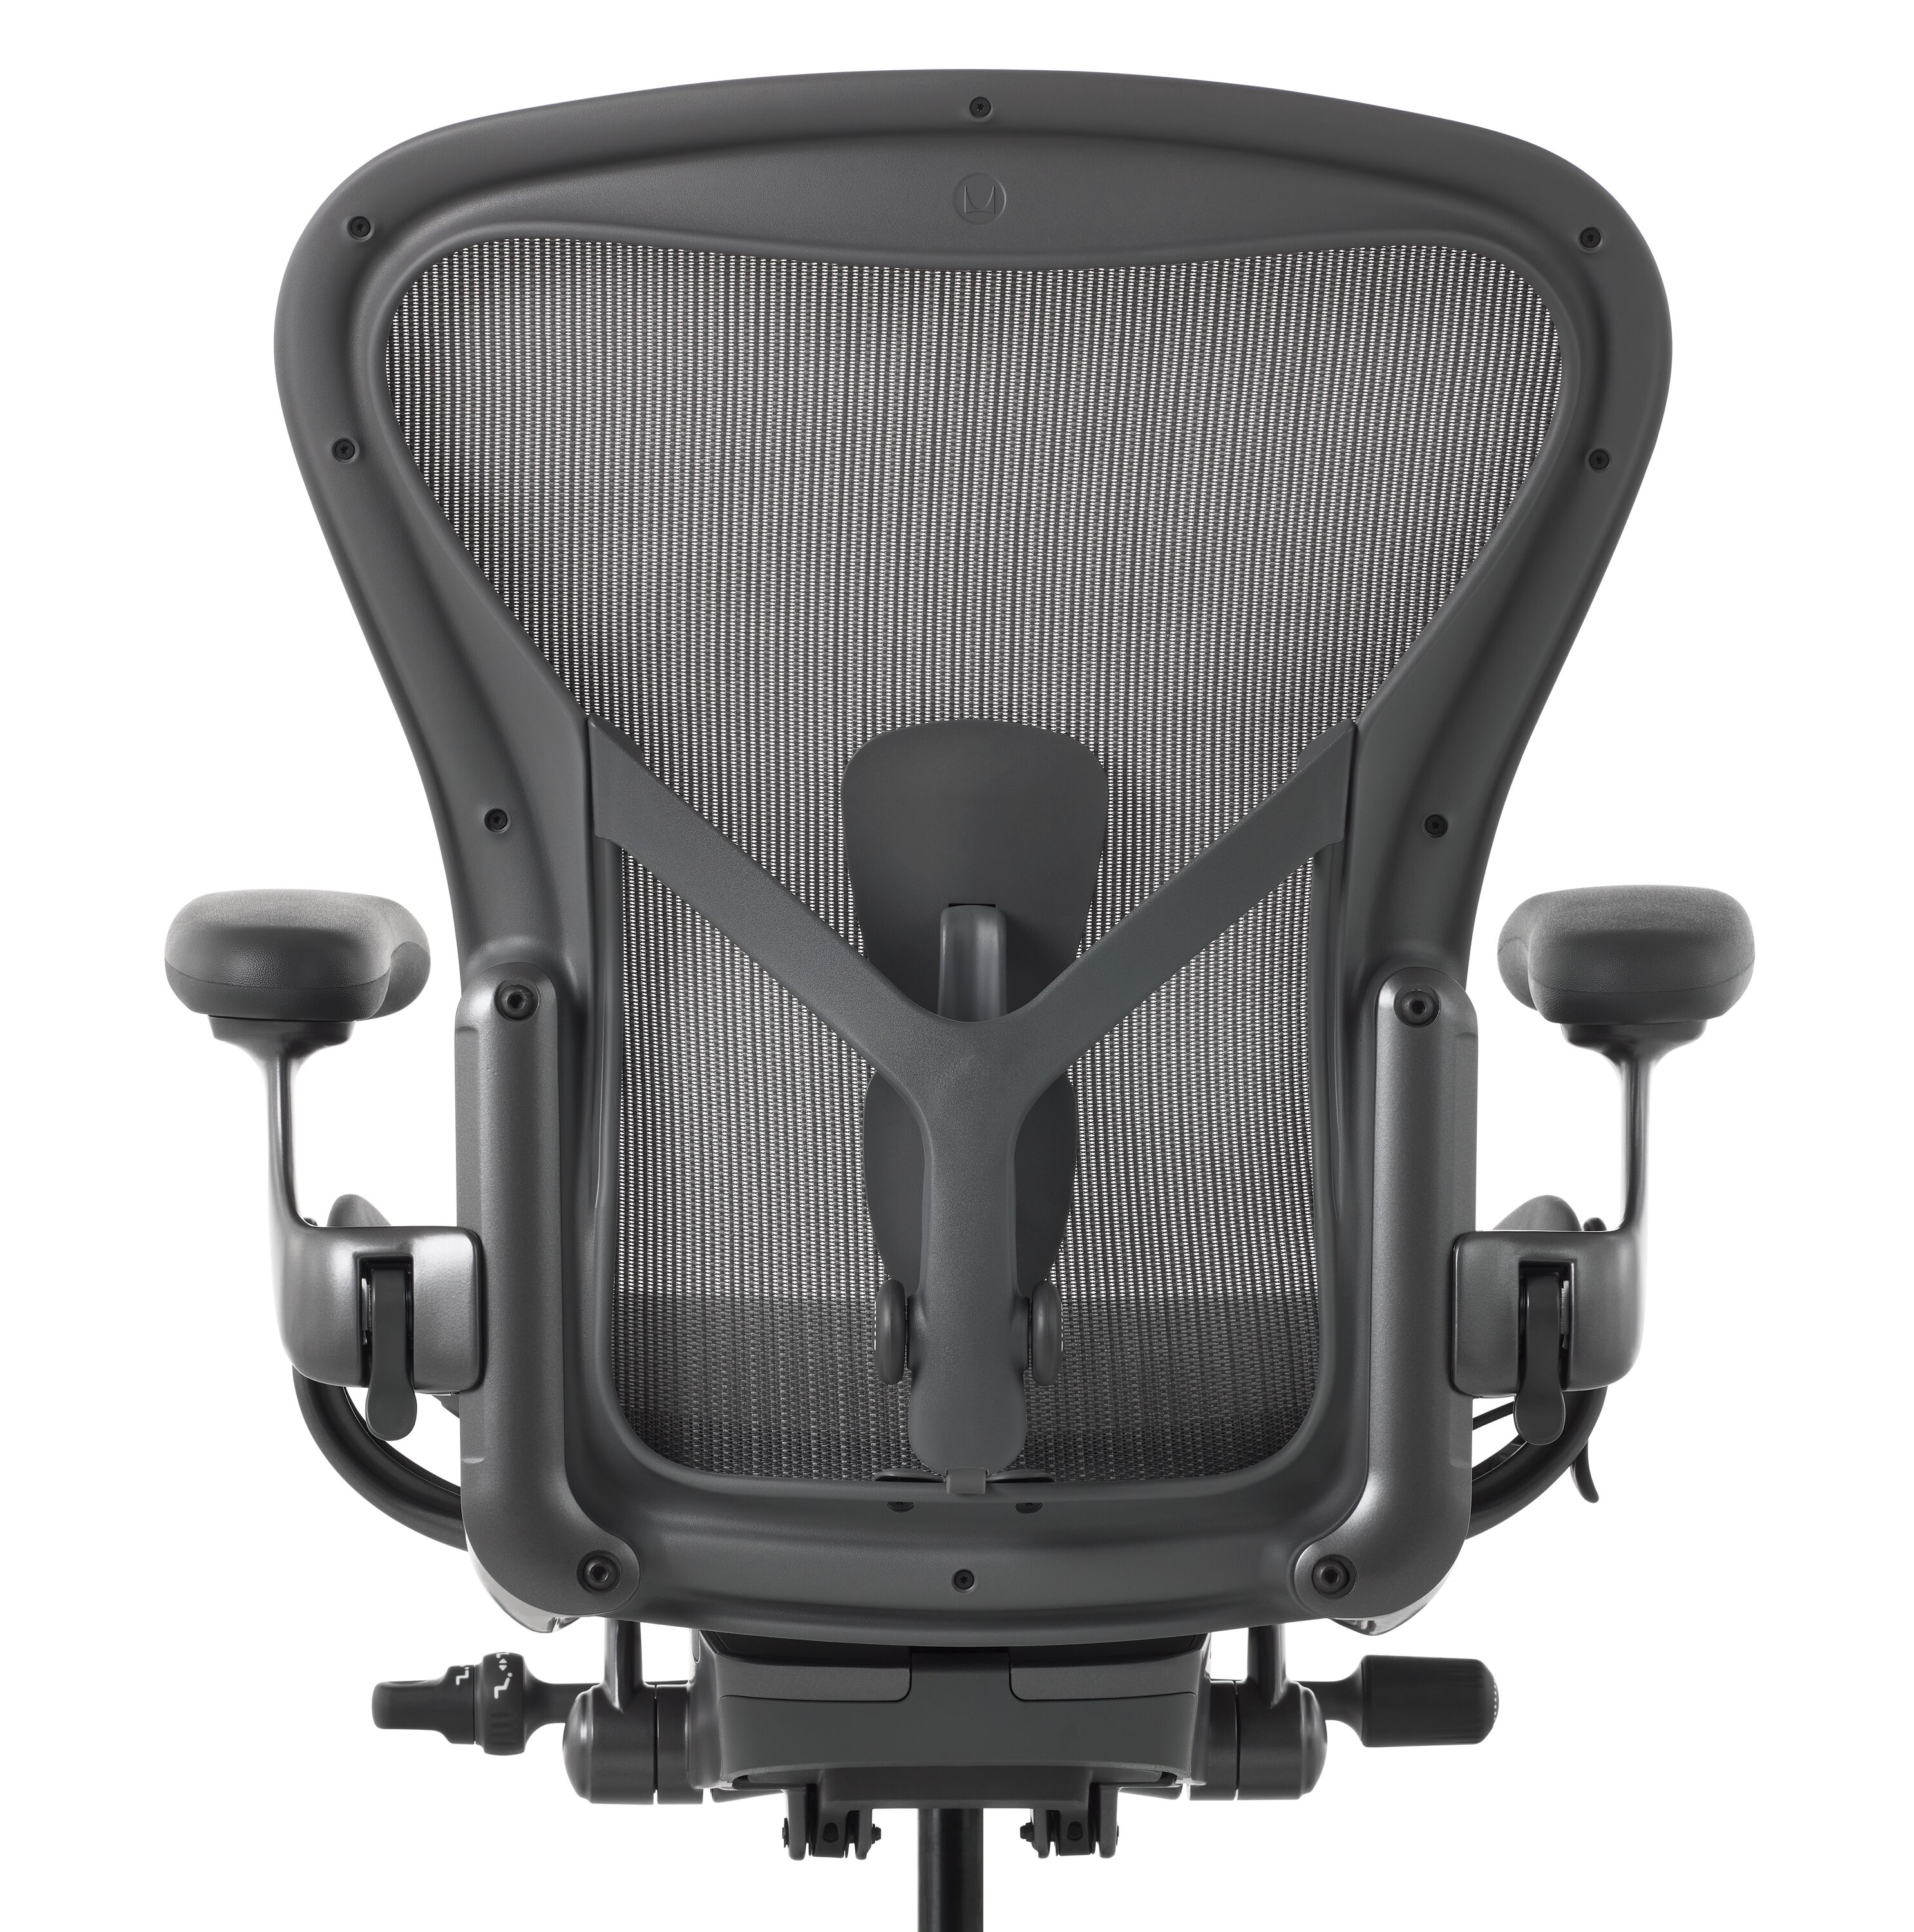 Aeron Chair, Adjustable Posturefit SL, Herman Miller